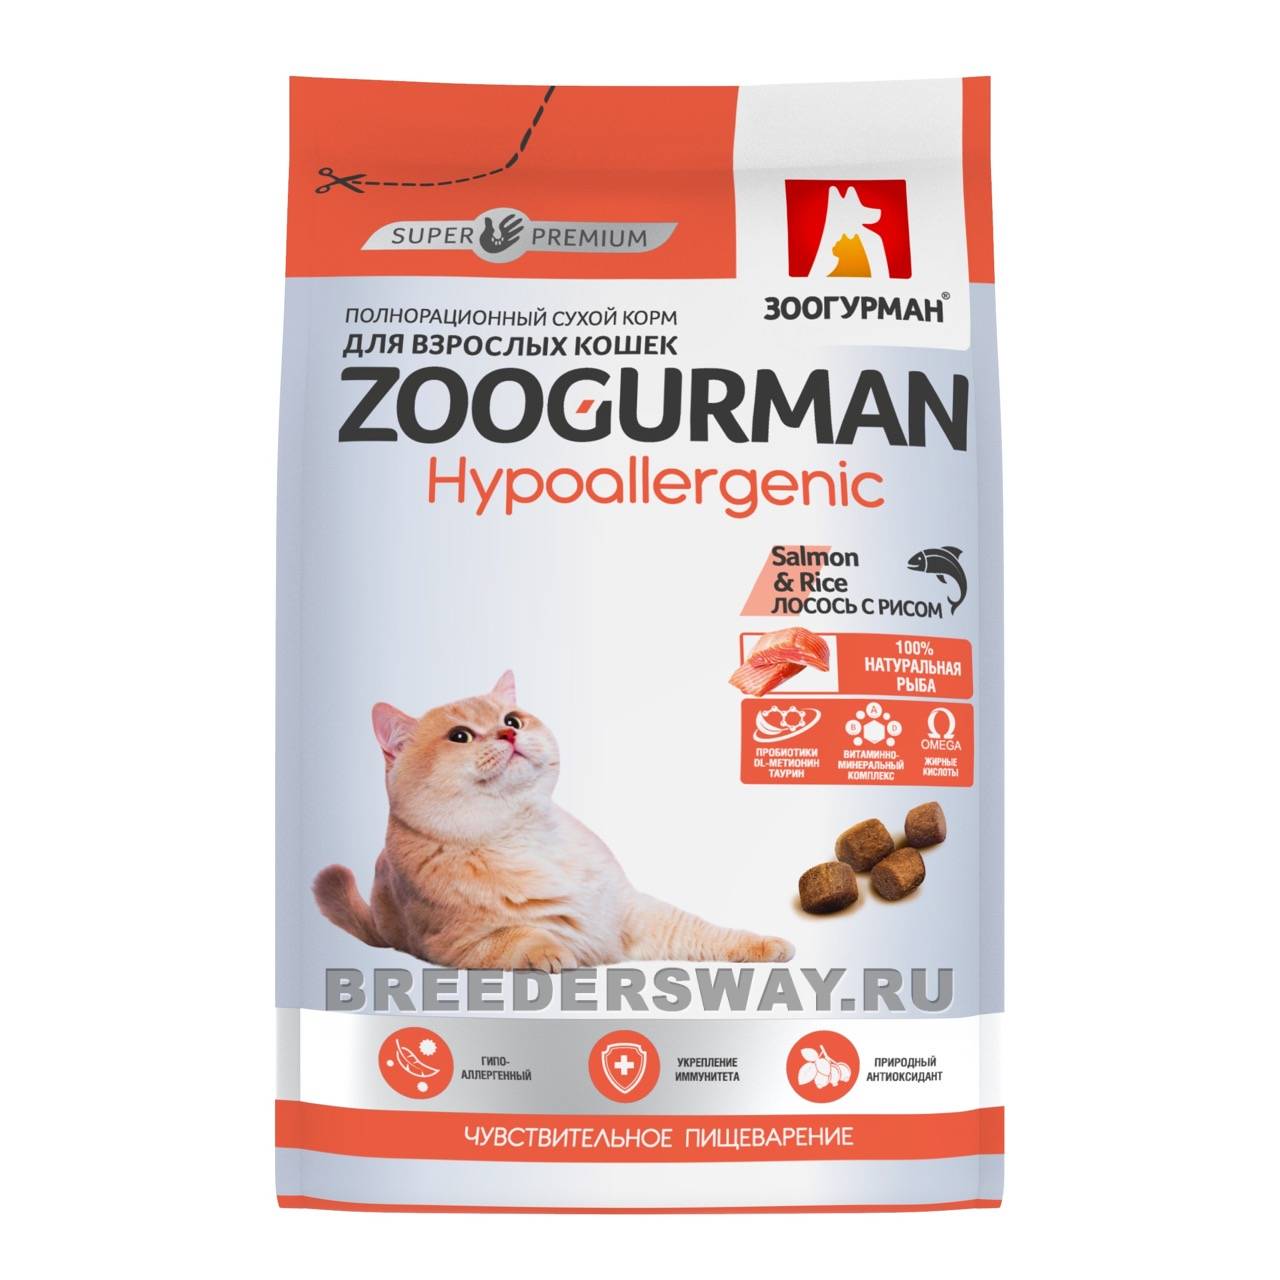 350гр Zoogurman Hypoallergenic для кошек супер-премиум Лосось с рисом 30/16 6мм